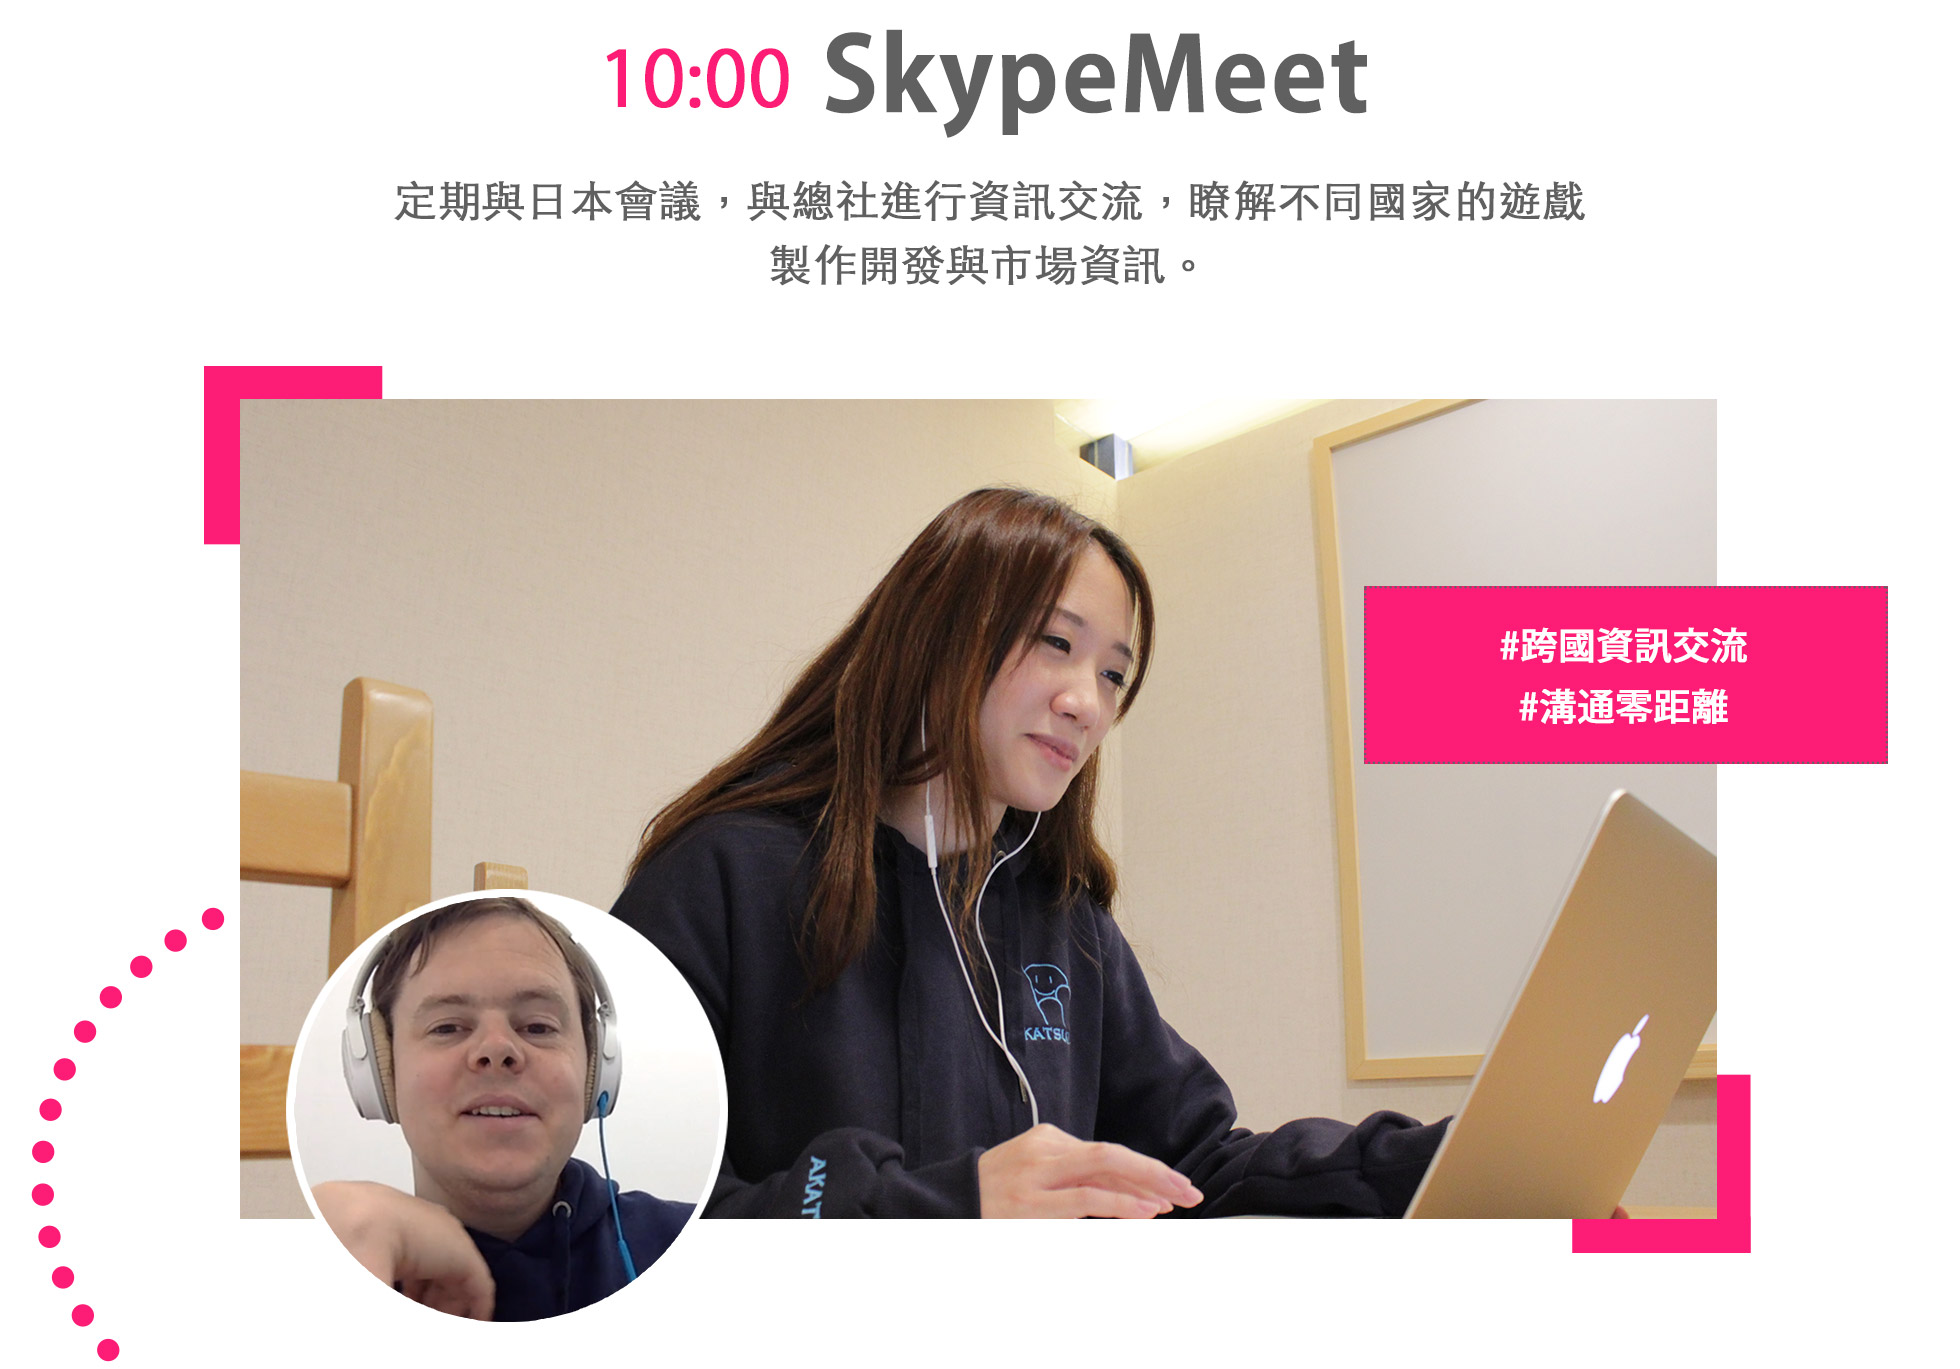 SkypeMeet